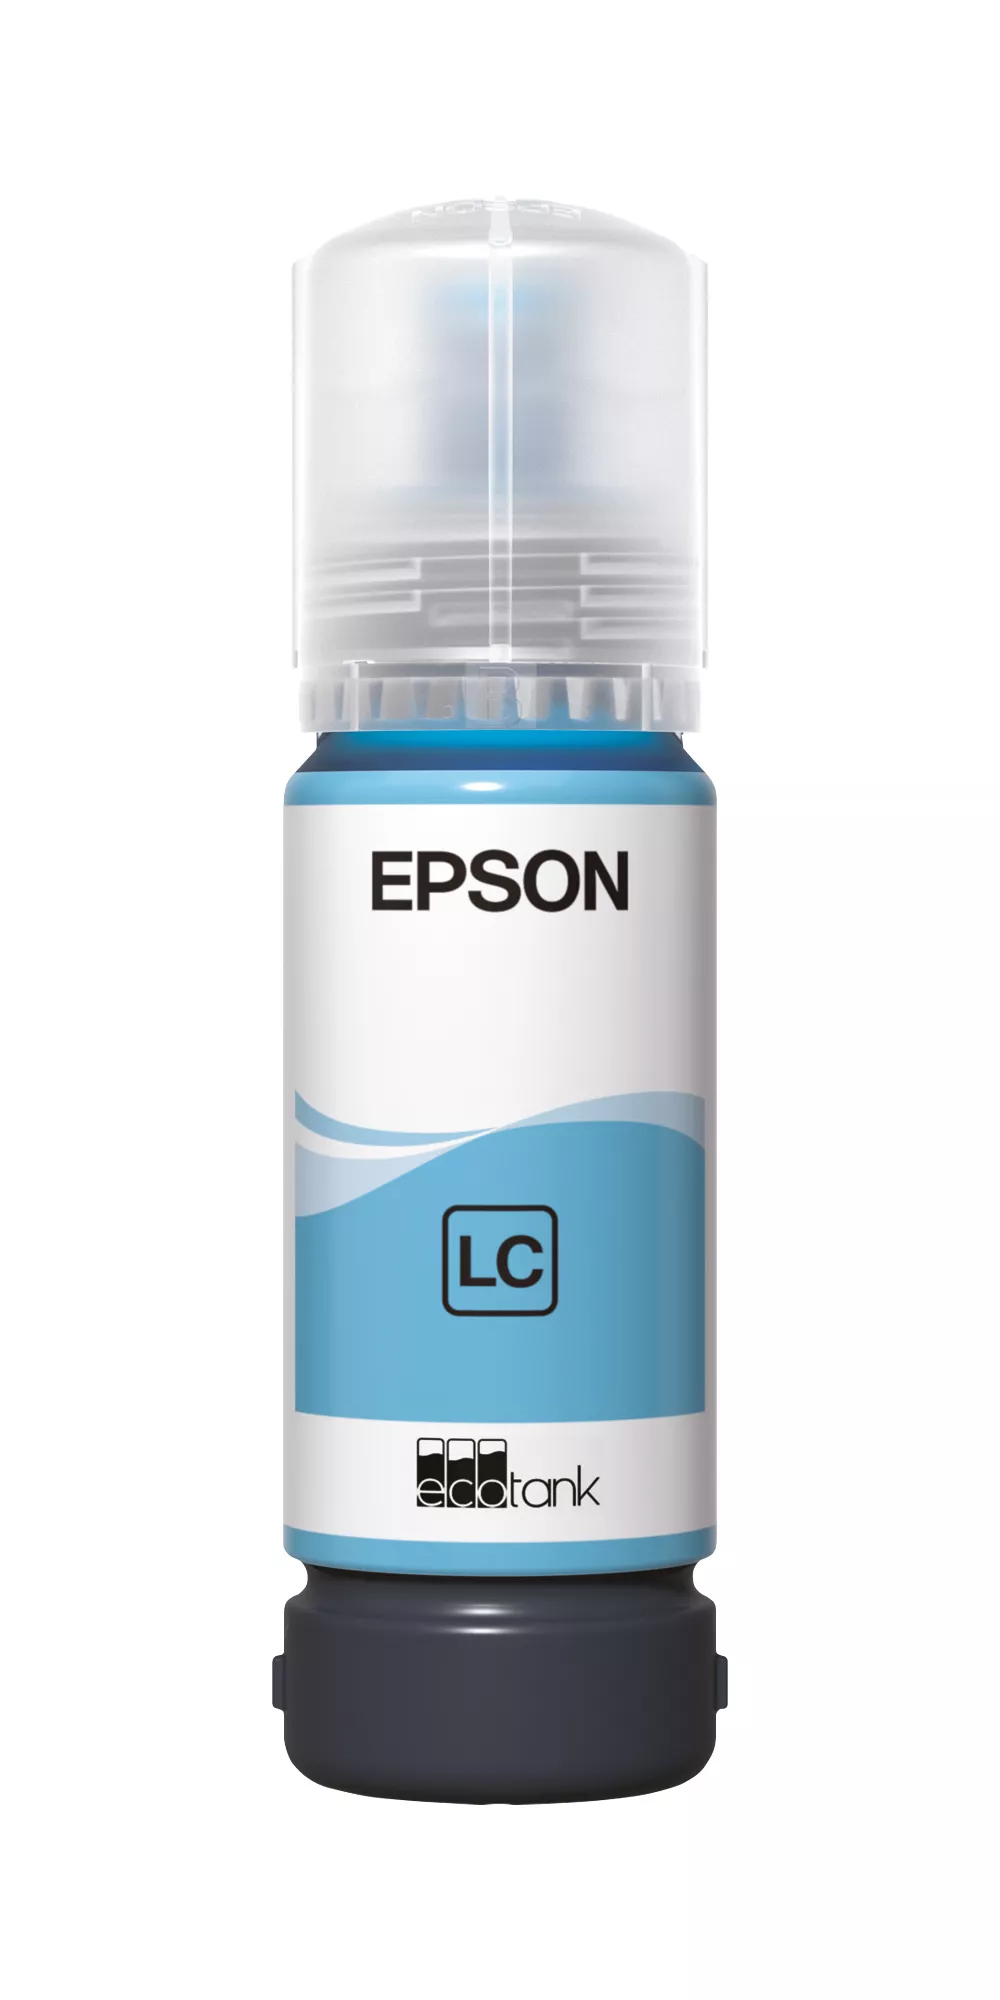 Achat EPSON 108 EcoTank Light Cyan Ink Bottle au meilleur prix